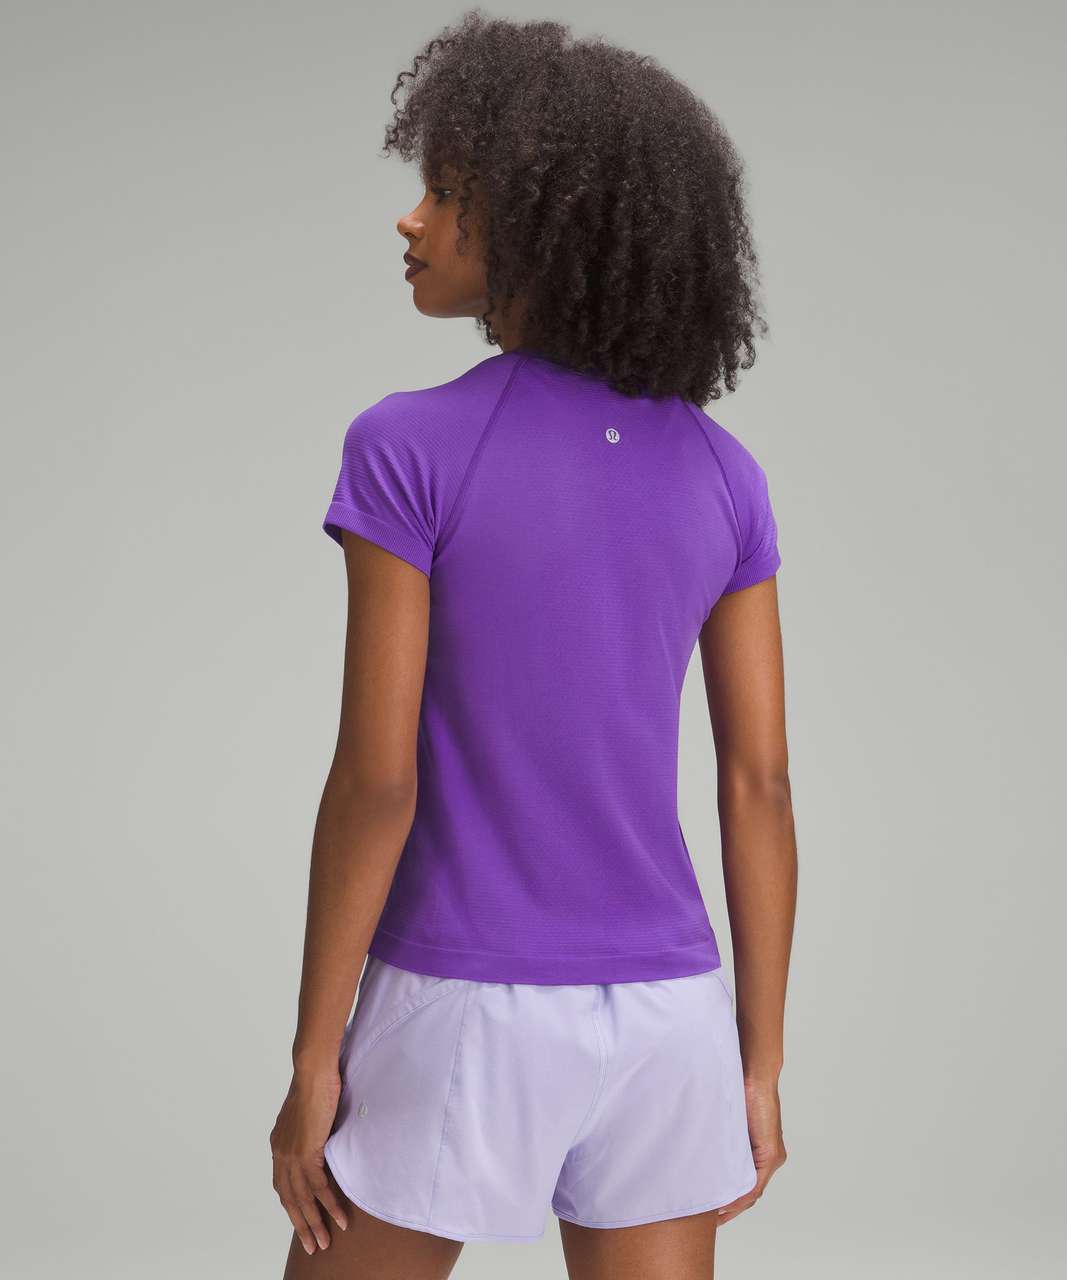 Swiftly Tech Short-Sleeve Shirt 2.0 Race Length *Plant-Based Nylon